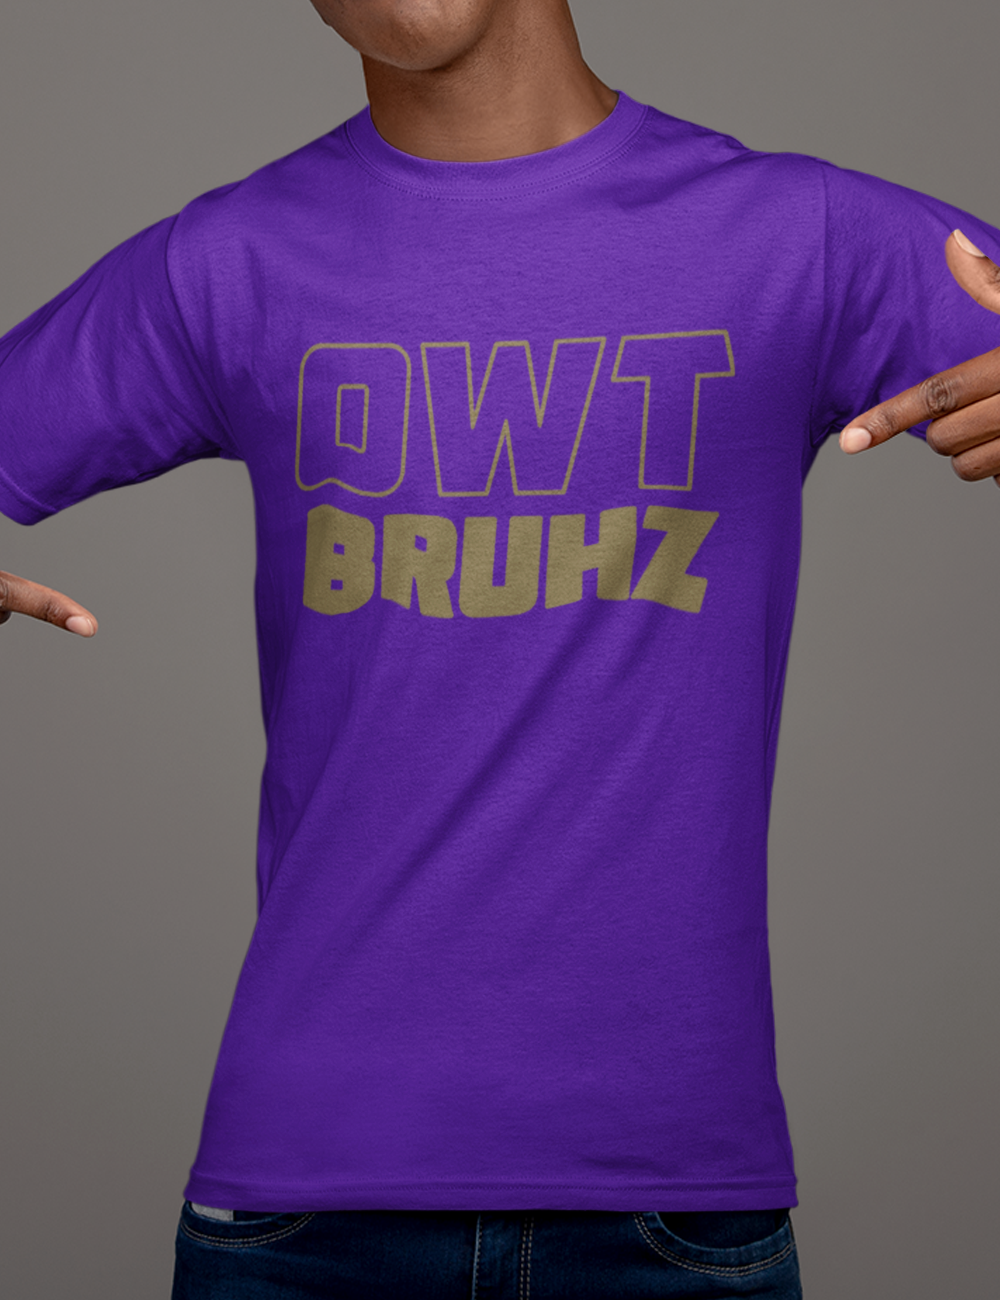 OWT BRUHZ T-SHIRT